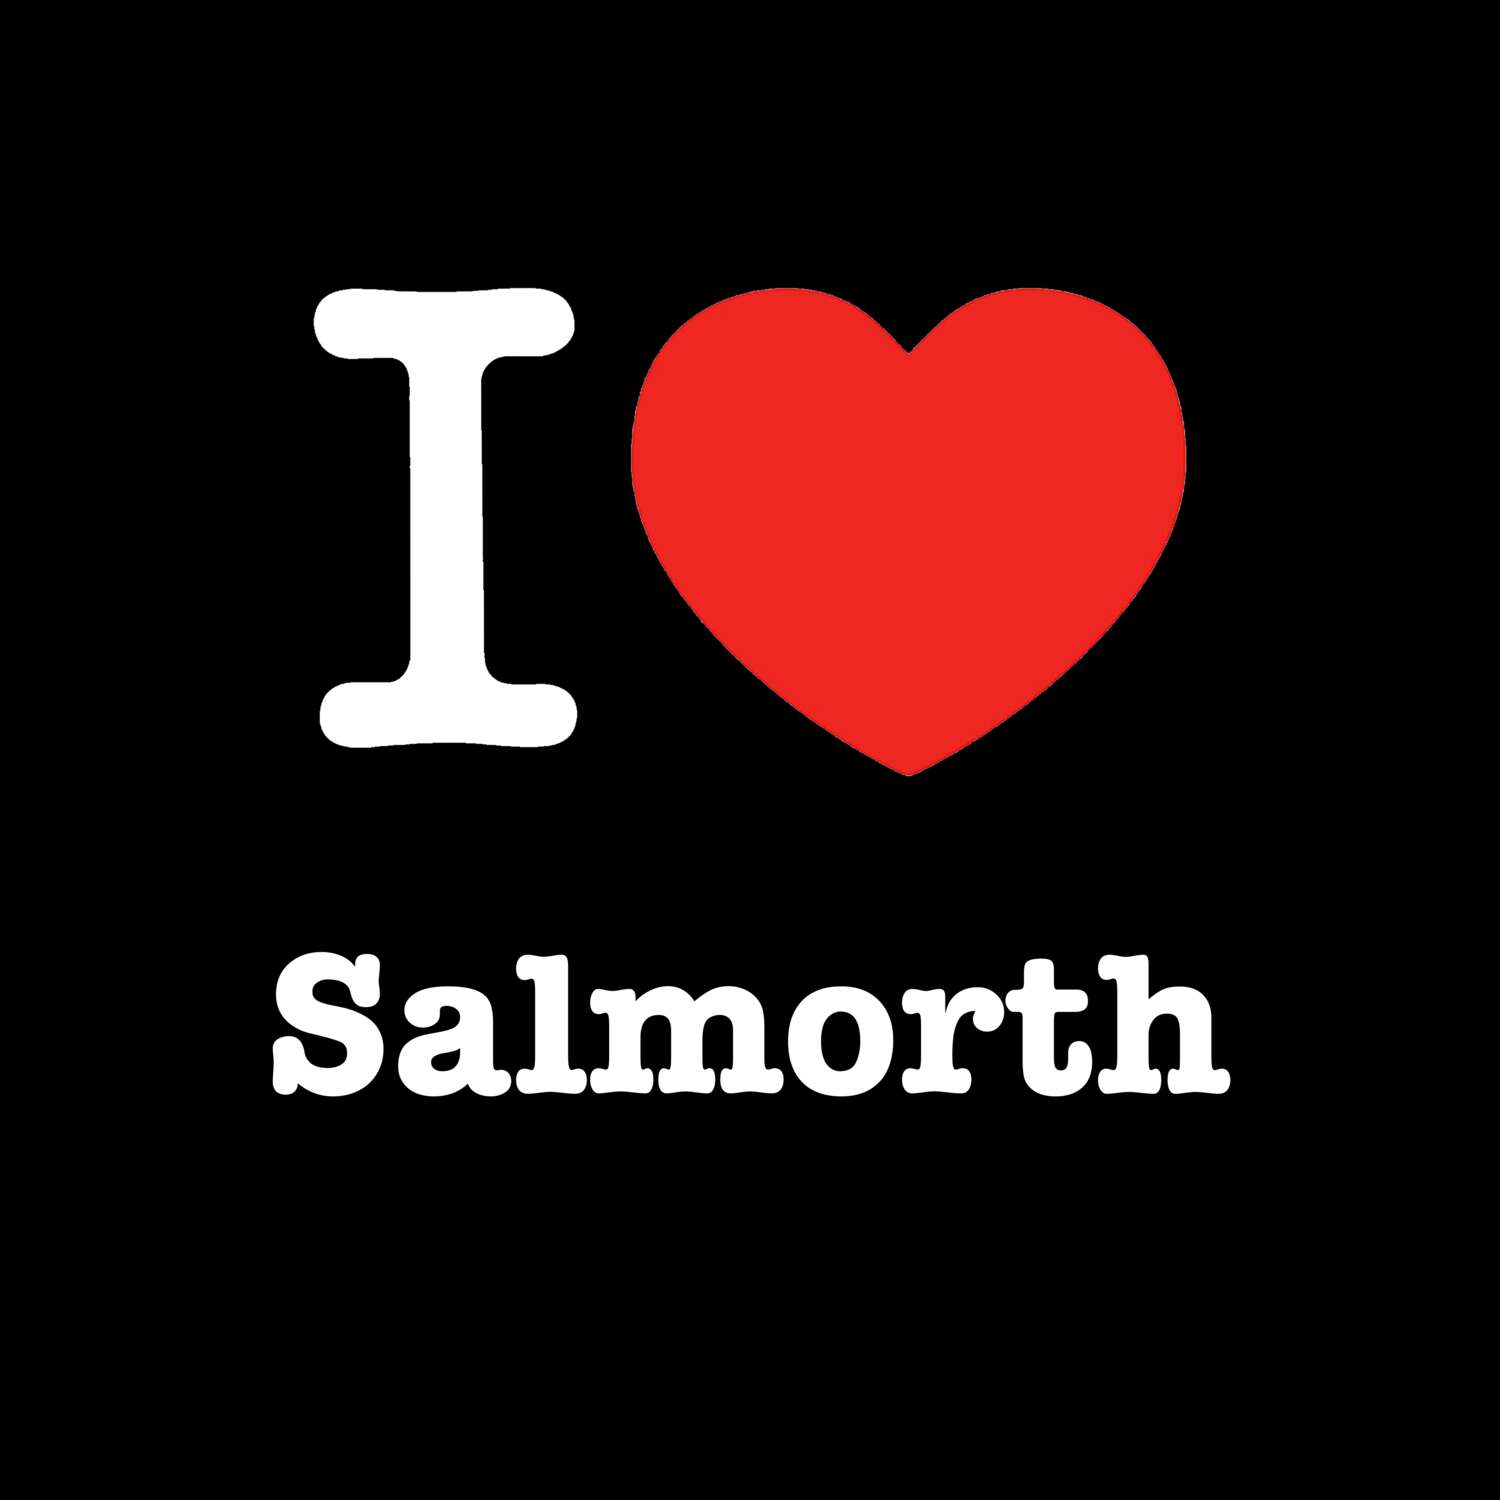 Salmorth T-Shirt »I love«